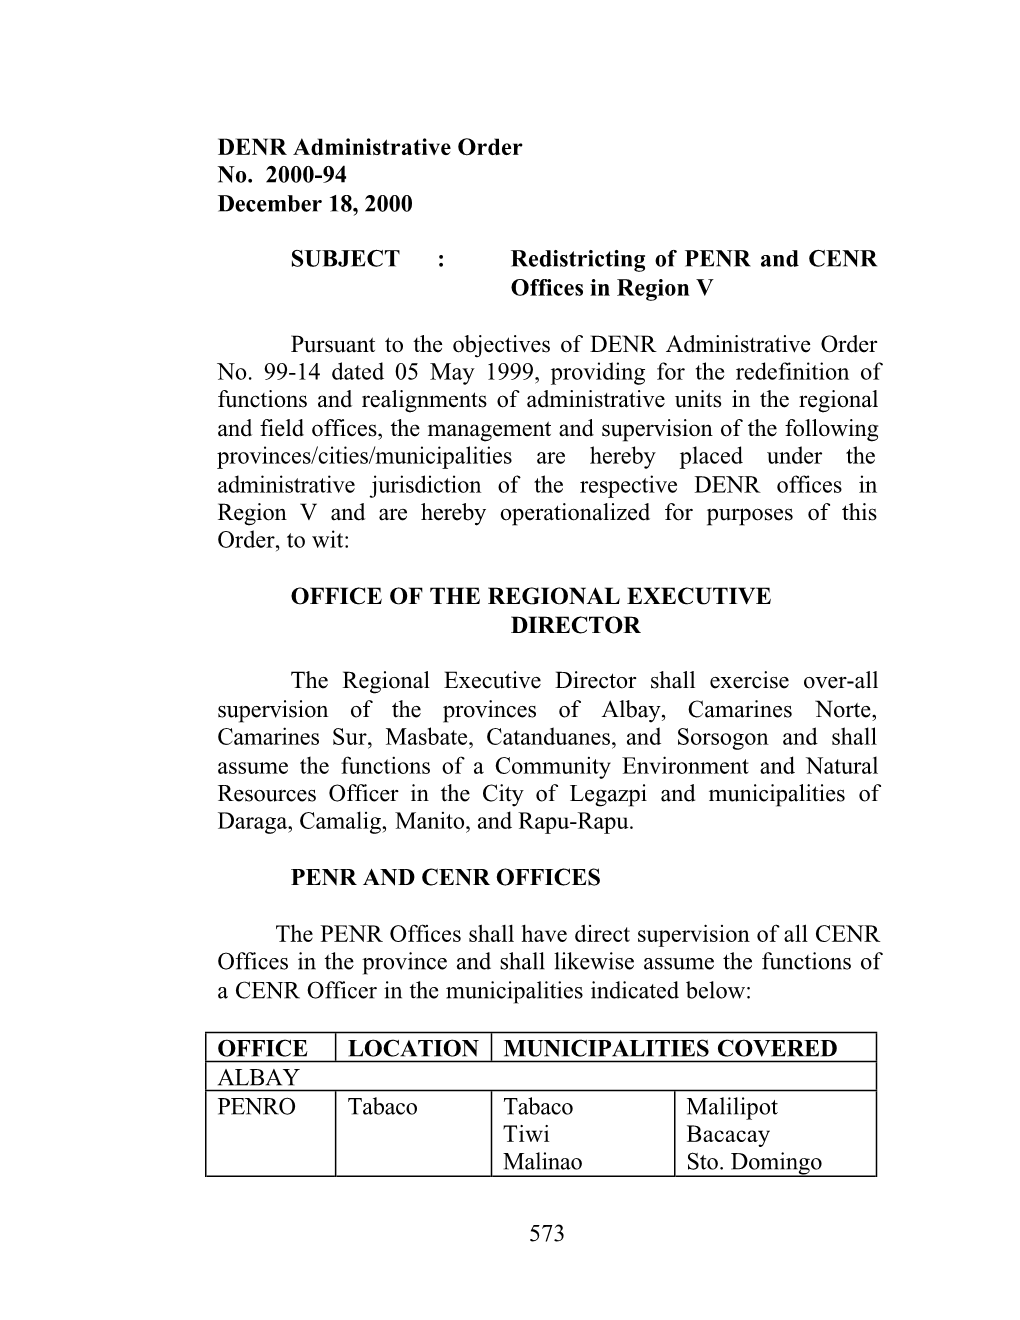 573 DENR Administrative Order No. 2000-94 December 18, 2000 SUBJECT : Redistricting of PENR and CENR Offices in Region V Pursua